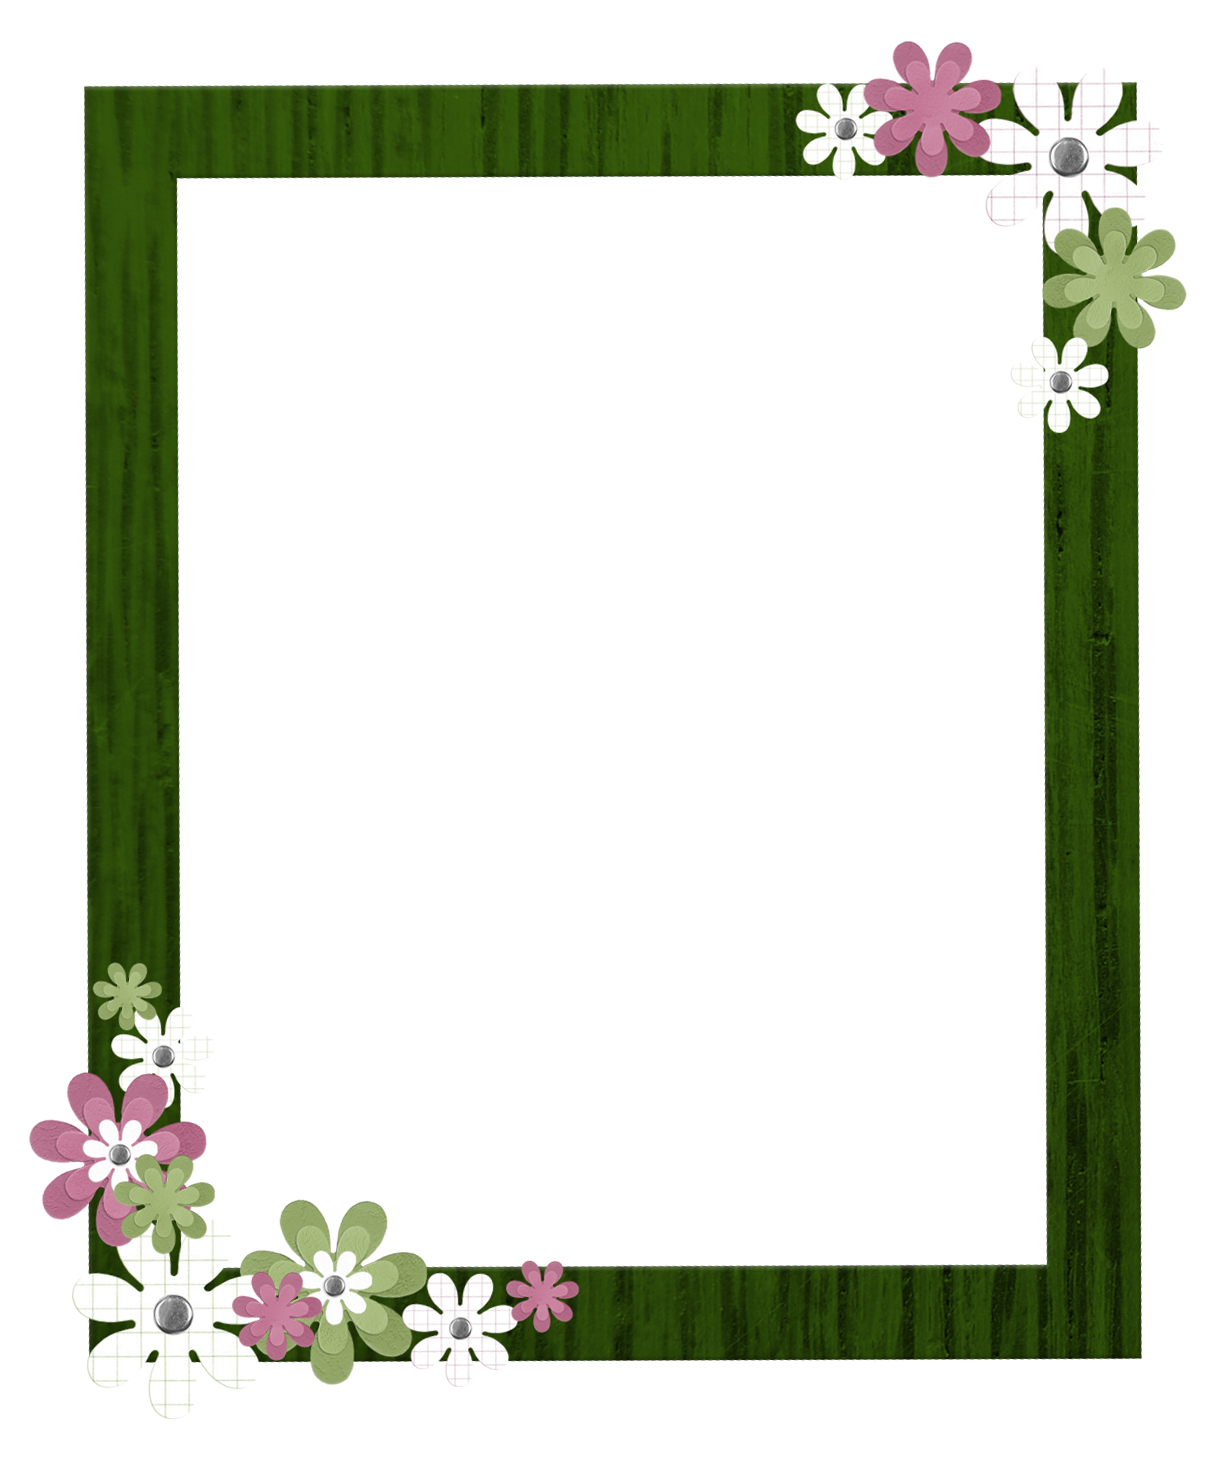 Free Clip Art Flowers Borders Frames